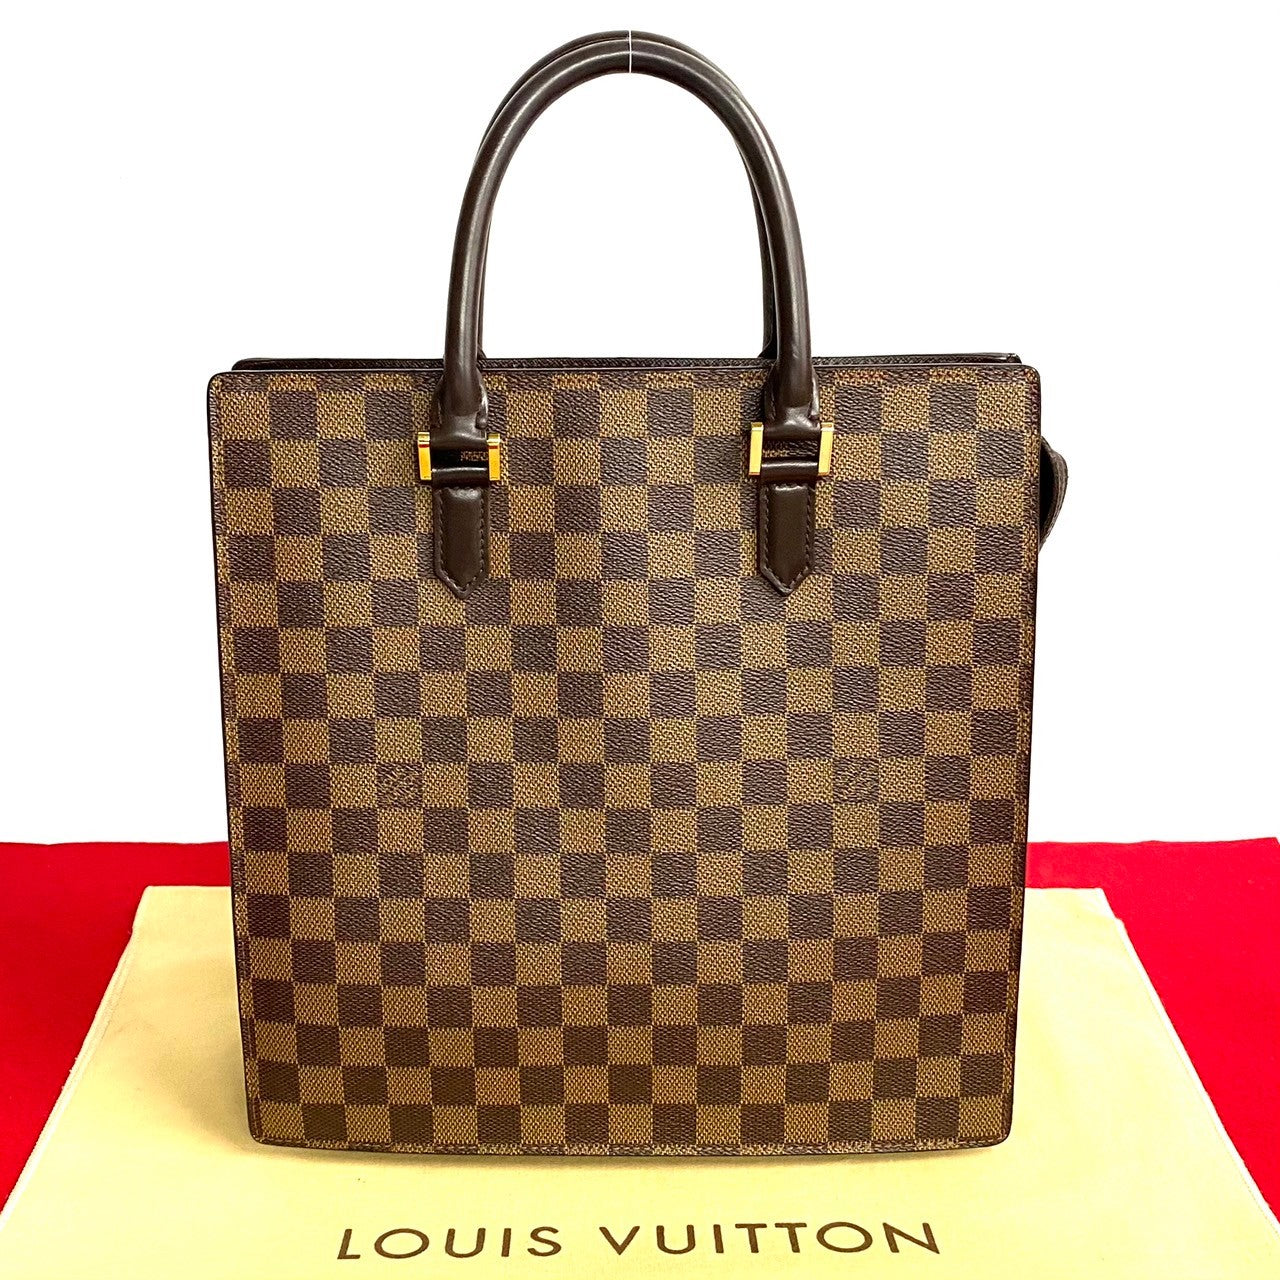 Louis Vuitton Venice PM Canvas Tote Bag N51145 in Excellent condition